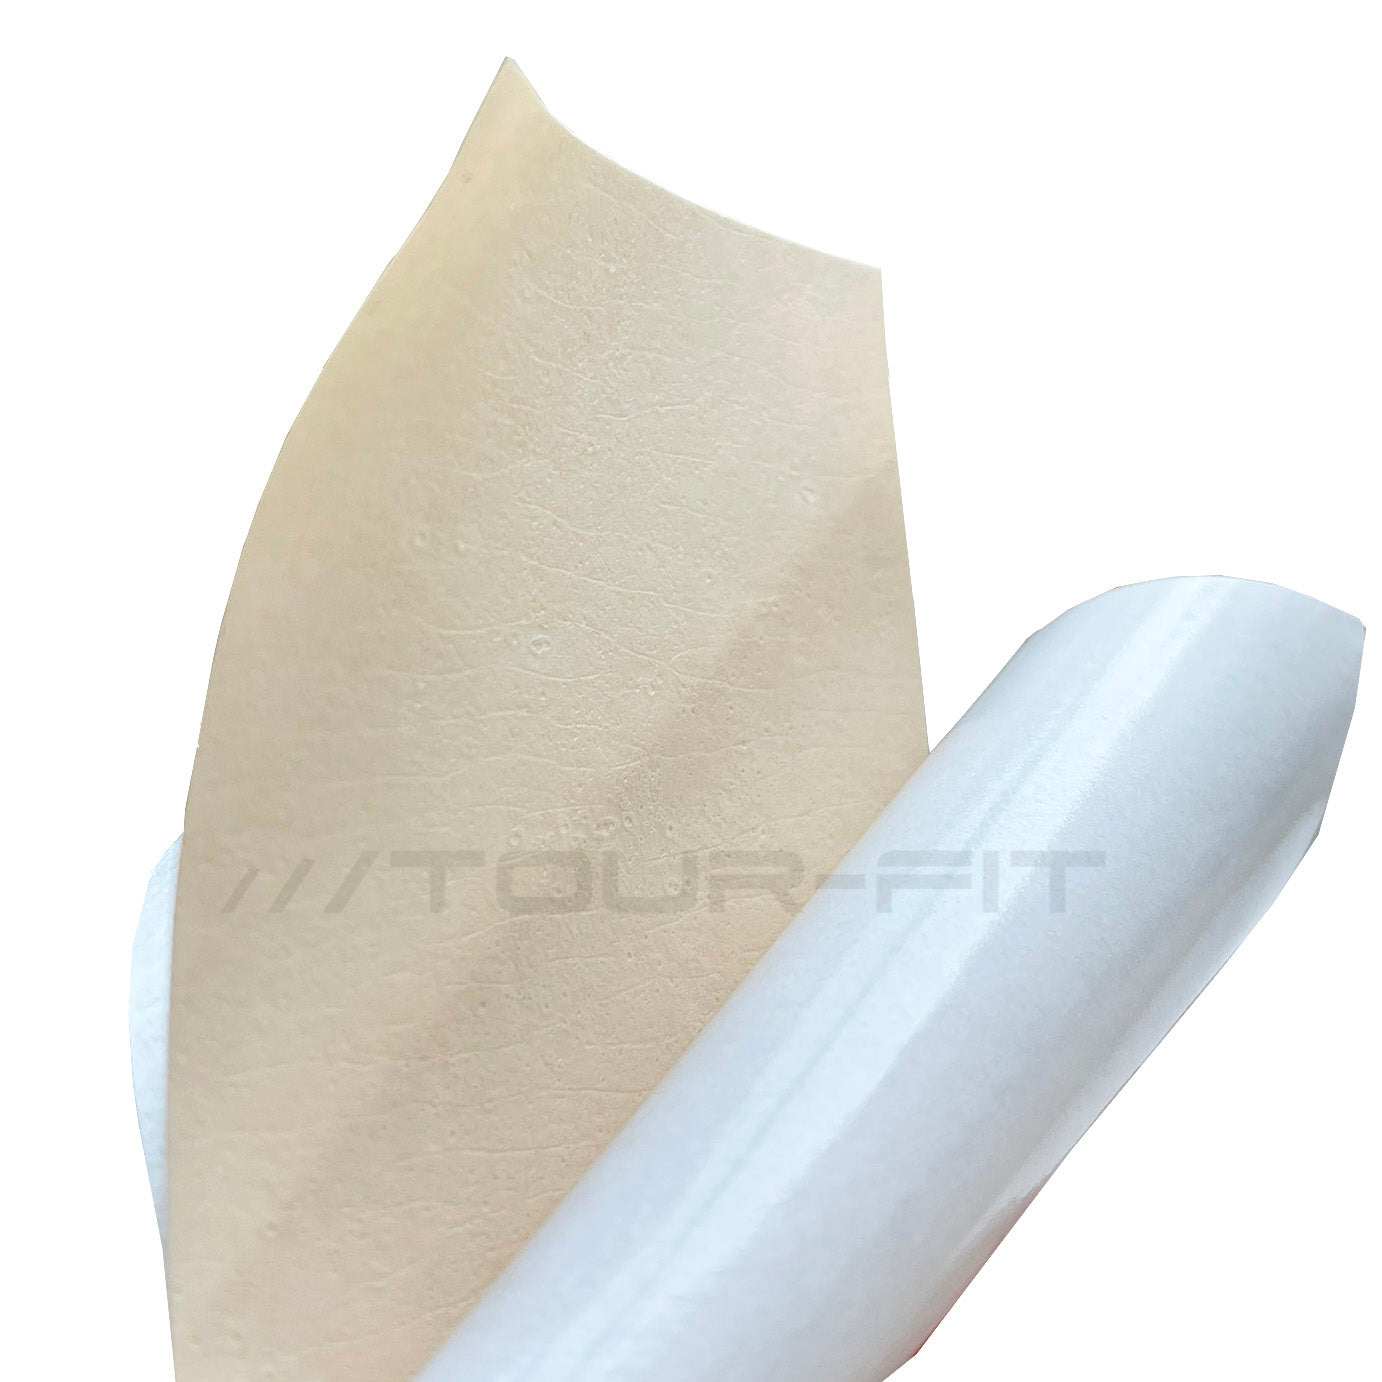 Tour-Fit Professional Golf Grip Tape Pre-Cut 10"x2" Strips Premium Quality